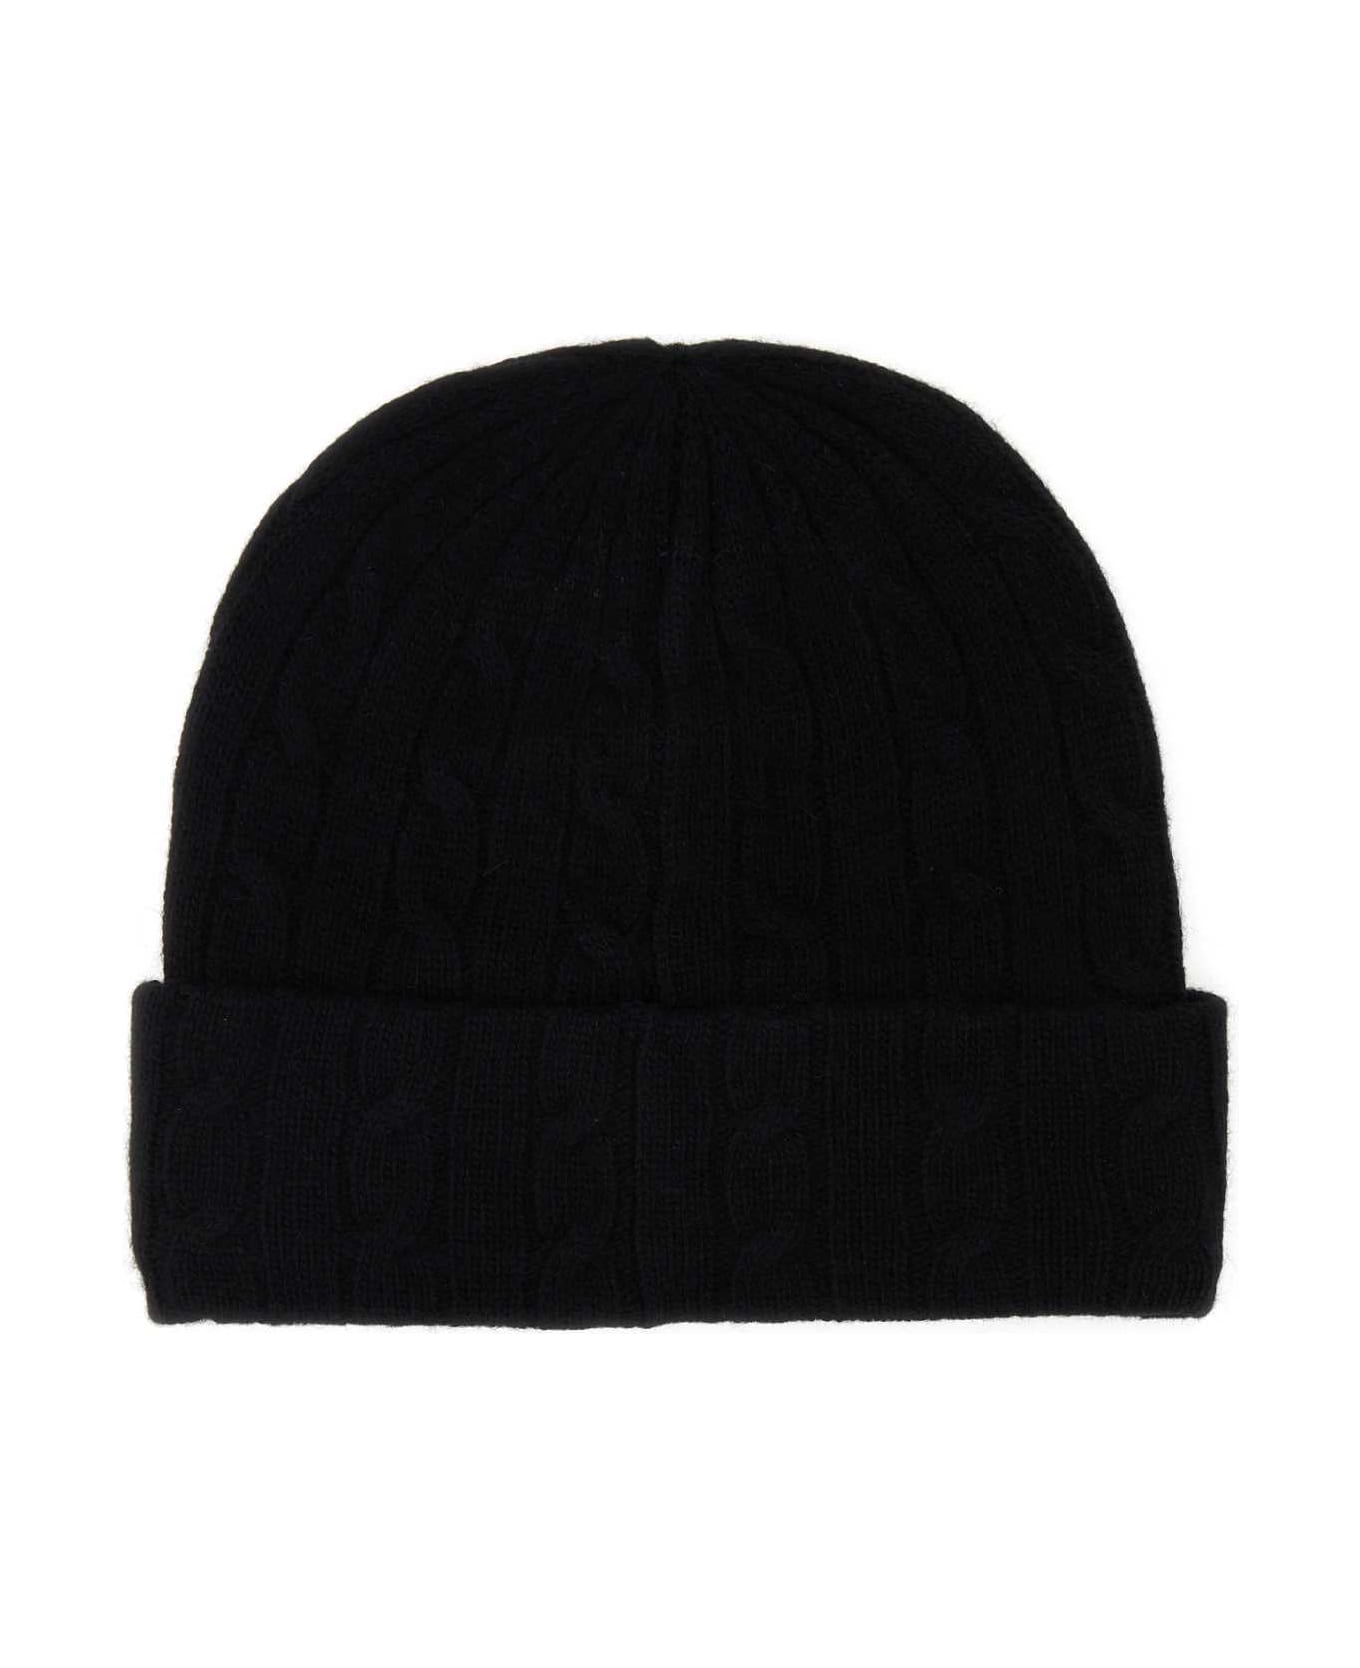 Polo Ralph Lauren Black Wool Blend Beanie Hat - 001